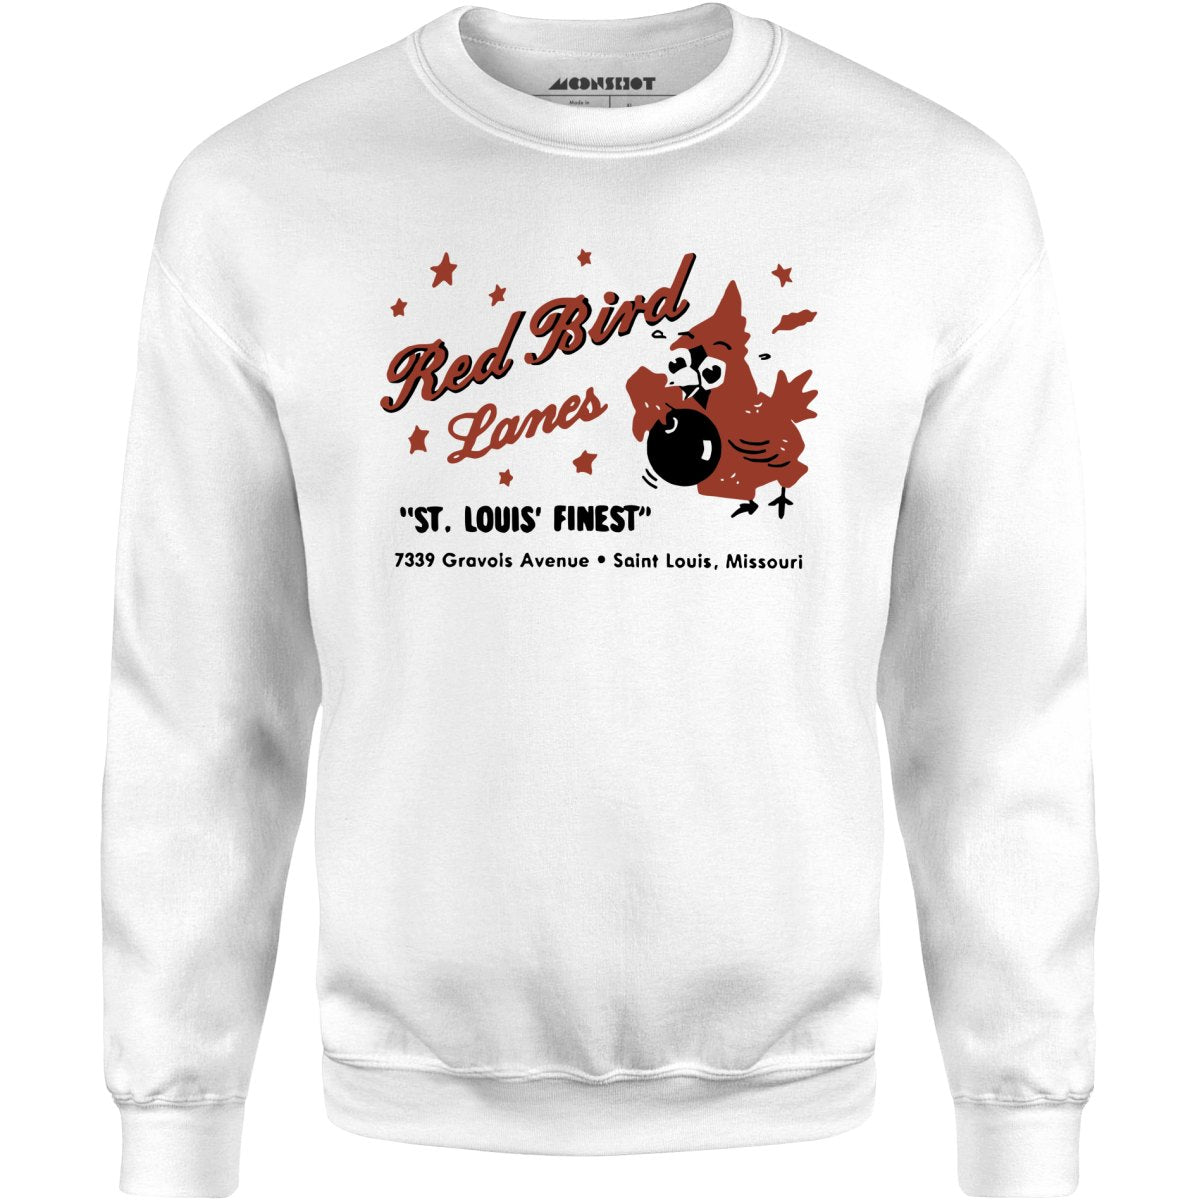 Red Bird Lanes v1 - St. Louis, MO - Vintage Bowling Alley - Unisex Sweatshirt